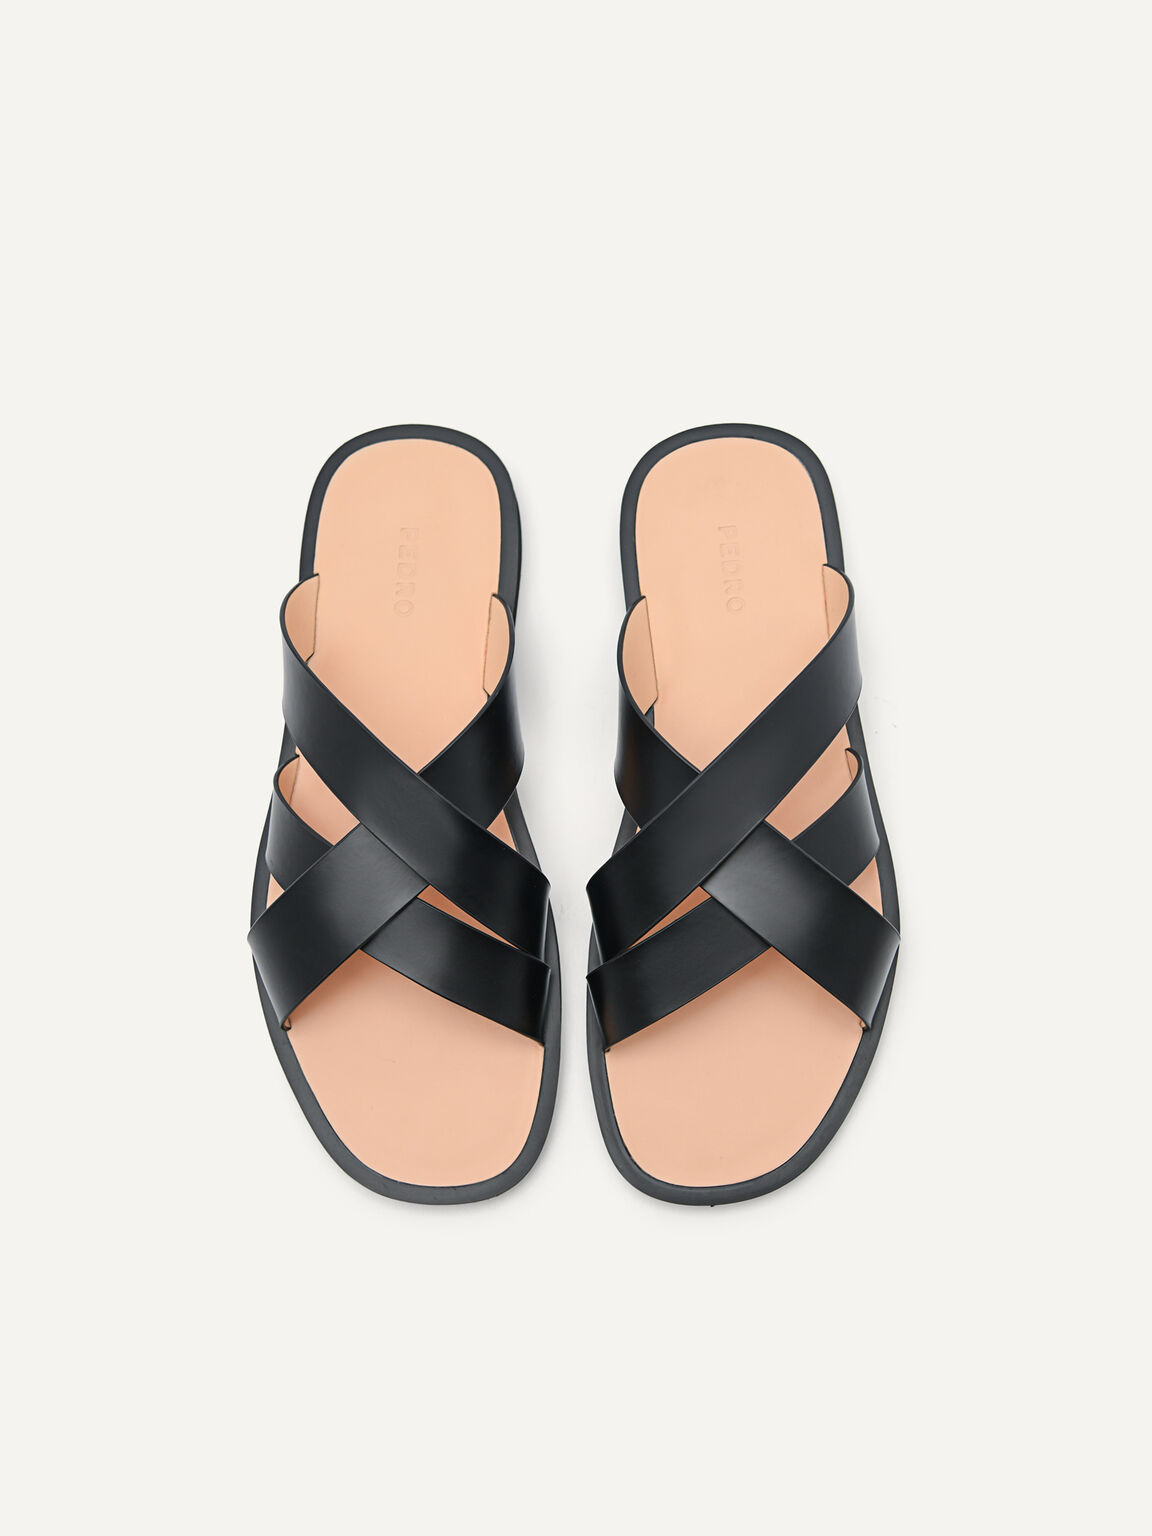 Dune Cross Strap Sandals, Black, hi-res